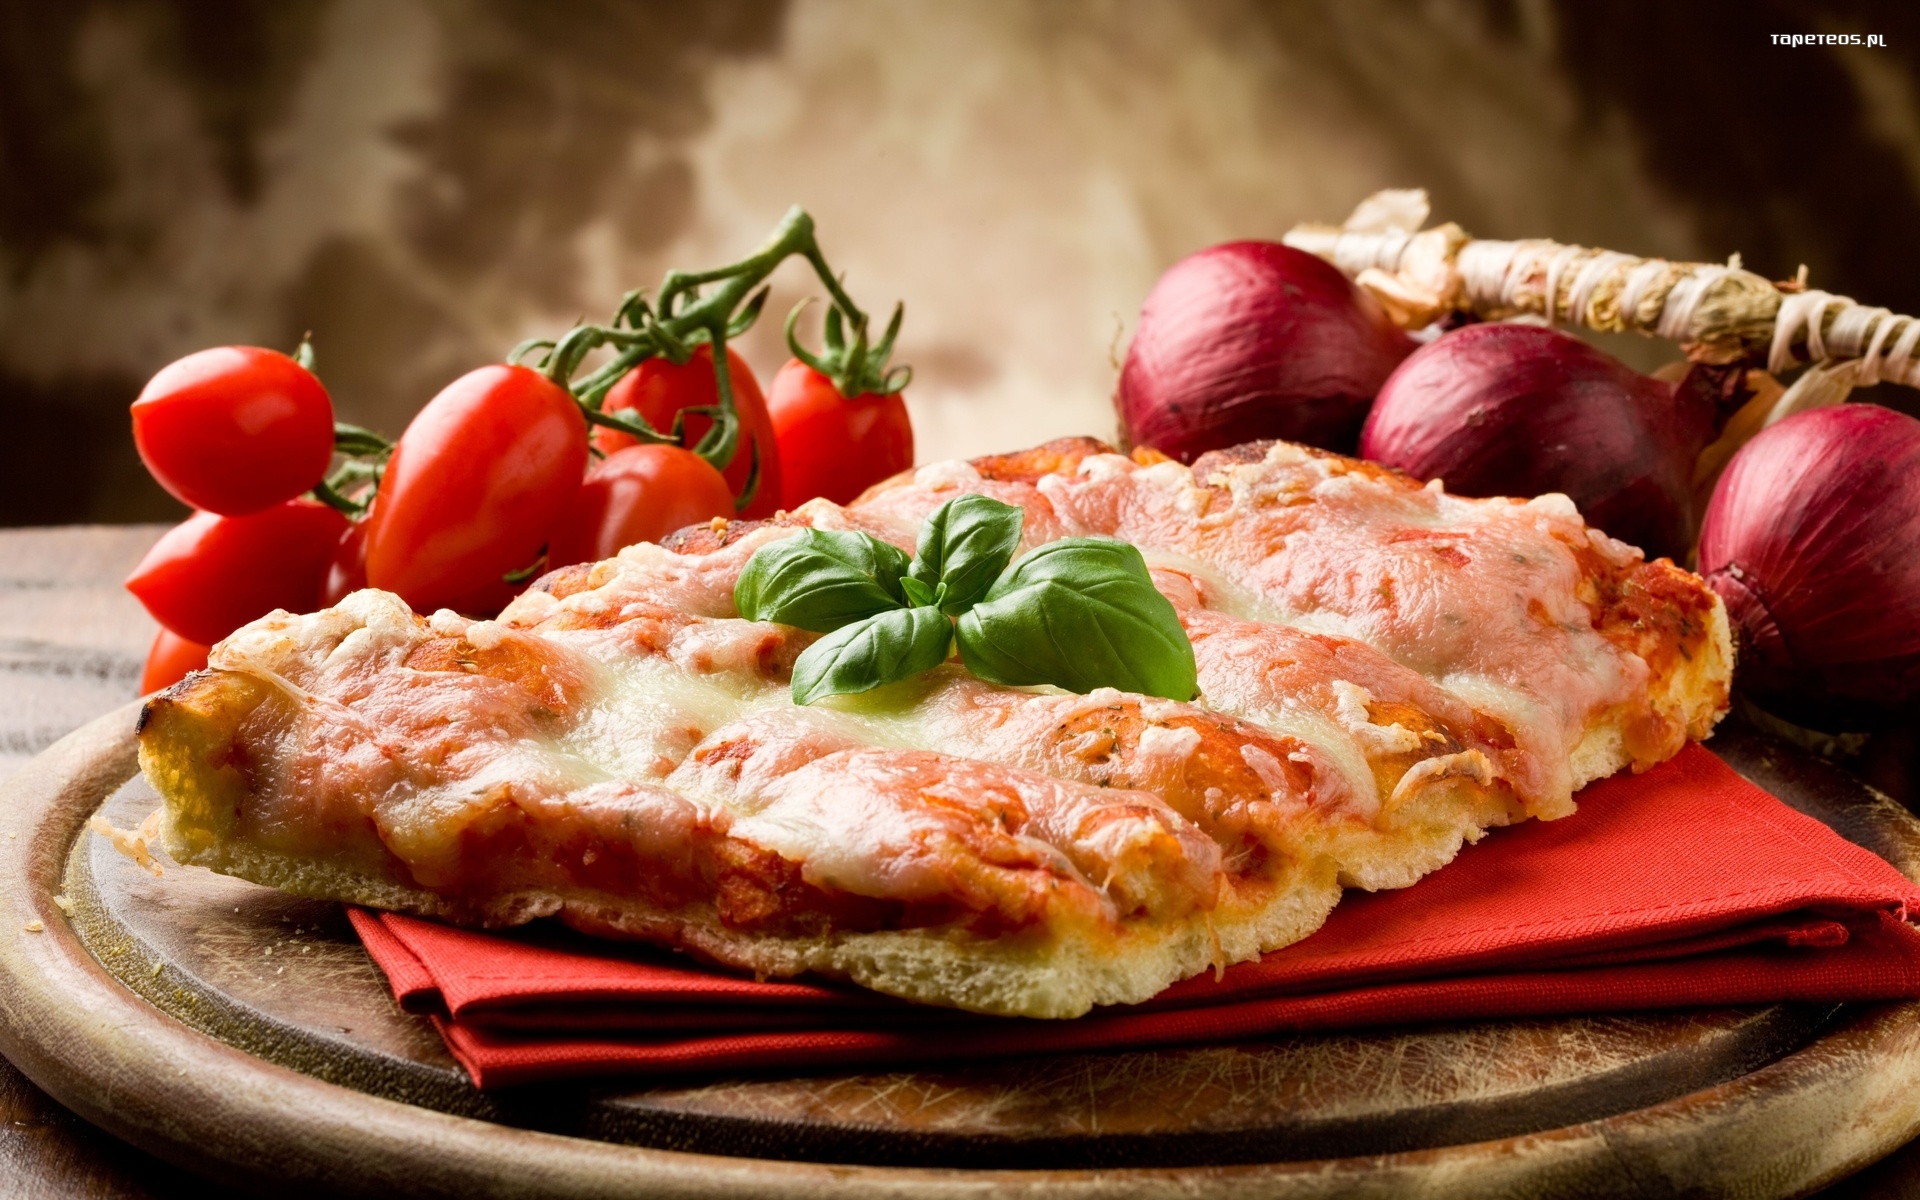 Pizza 031 Fast Food, Cebula, Pomidory